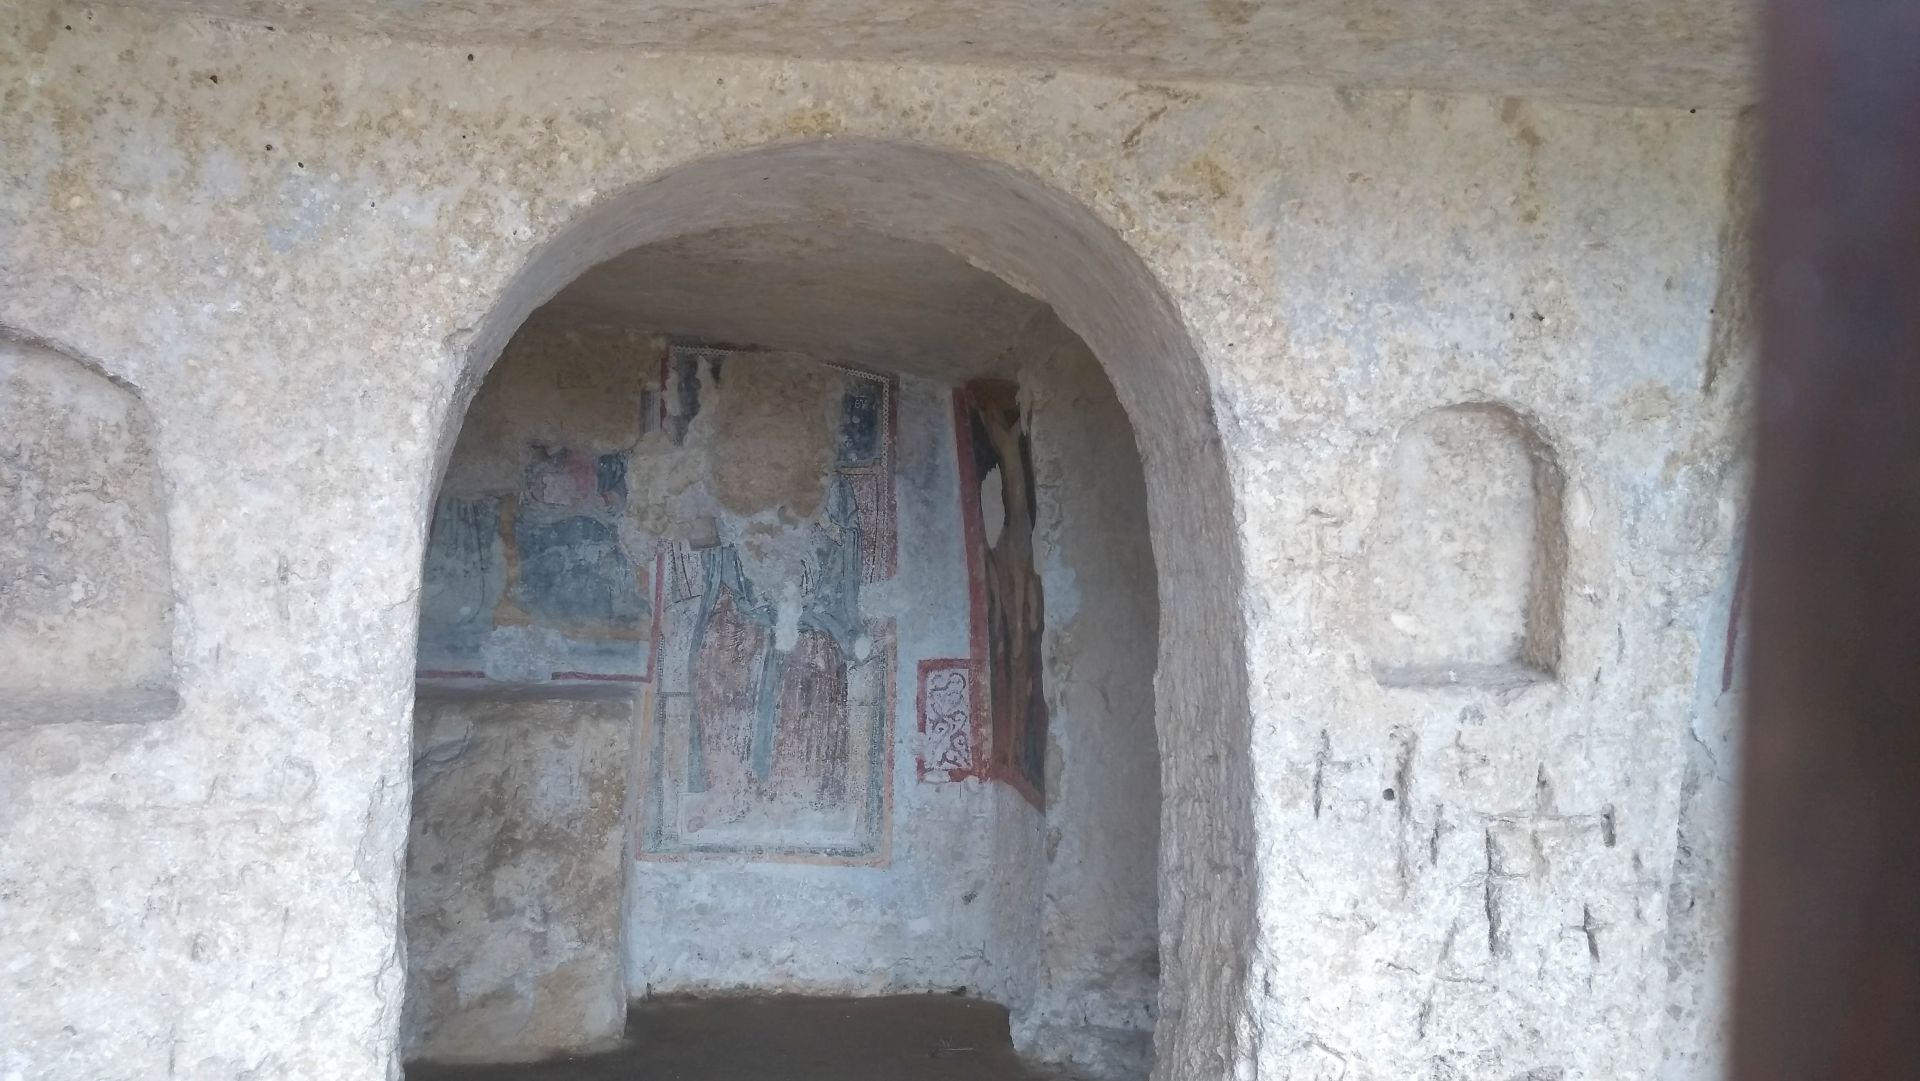 Bogen in der Felsenhöhle, dahinter Fresken an der Wand.